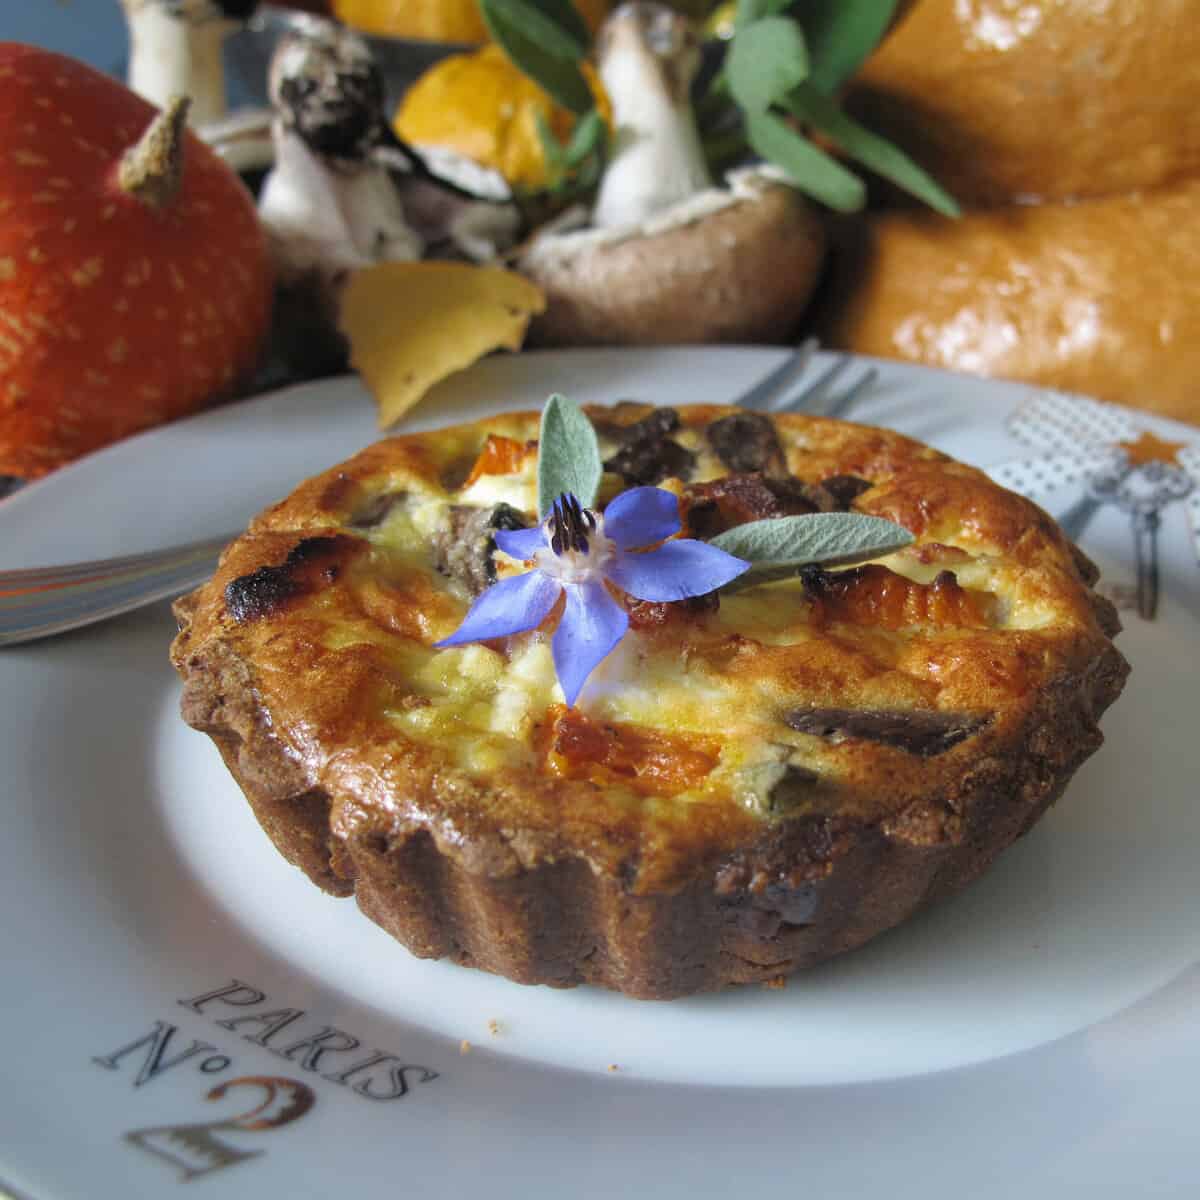 Straight shot of chestnut, pumpkin & mushroom tart with borage flower on top.